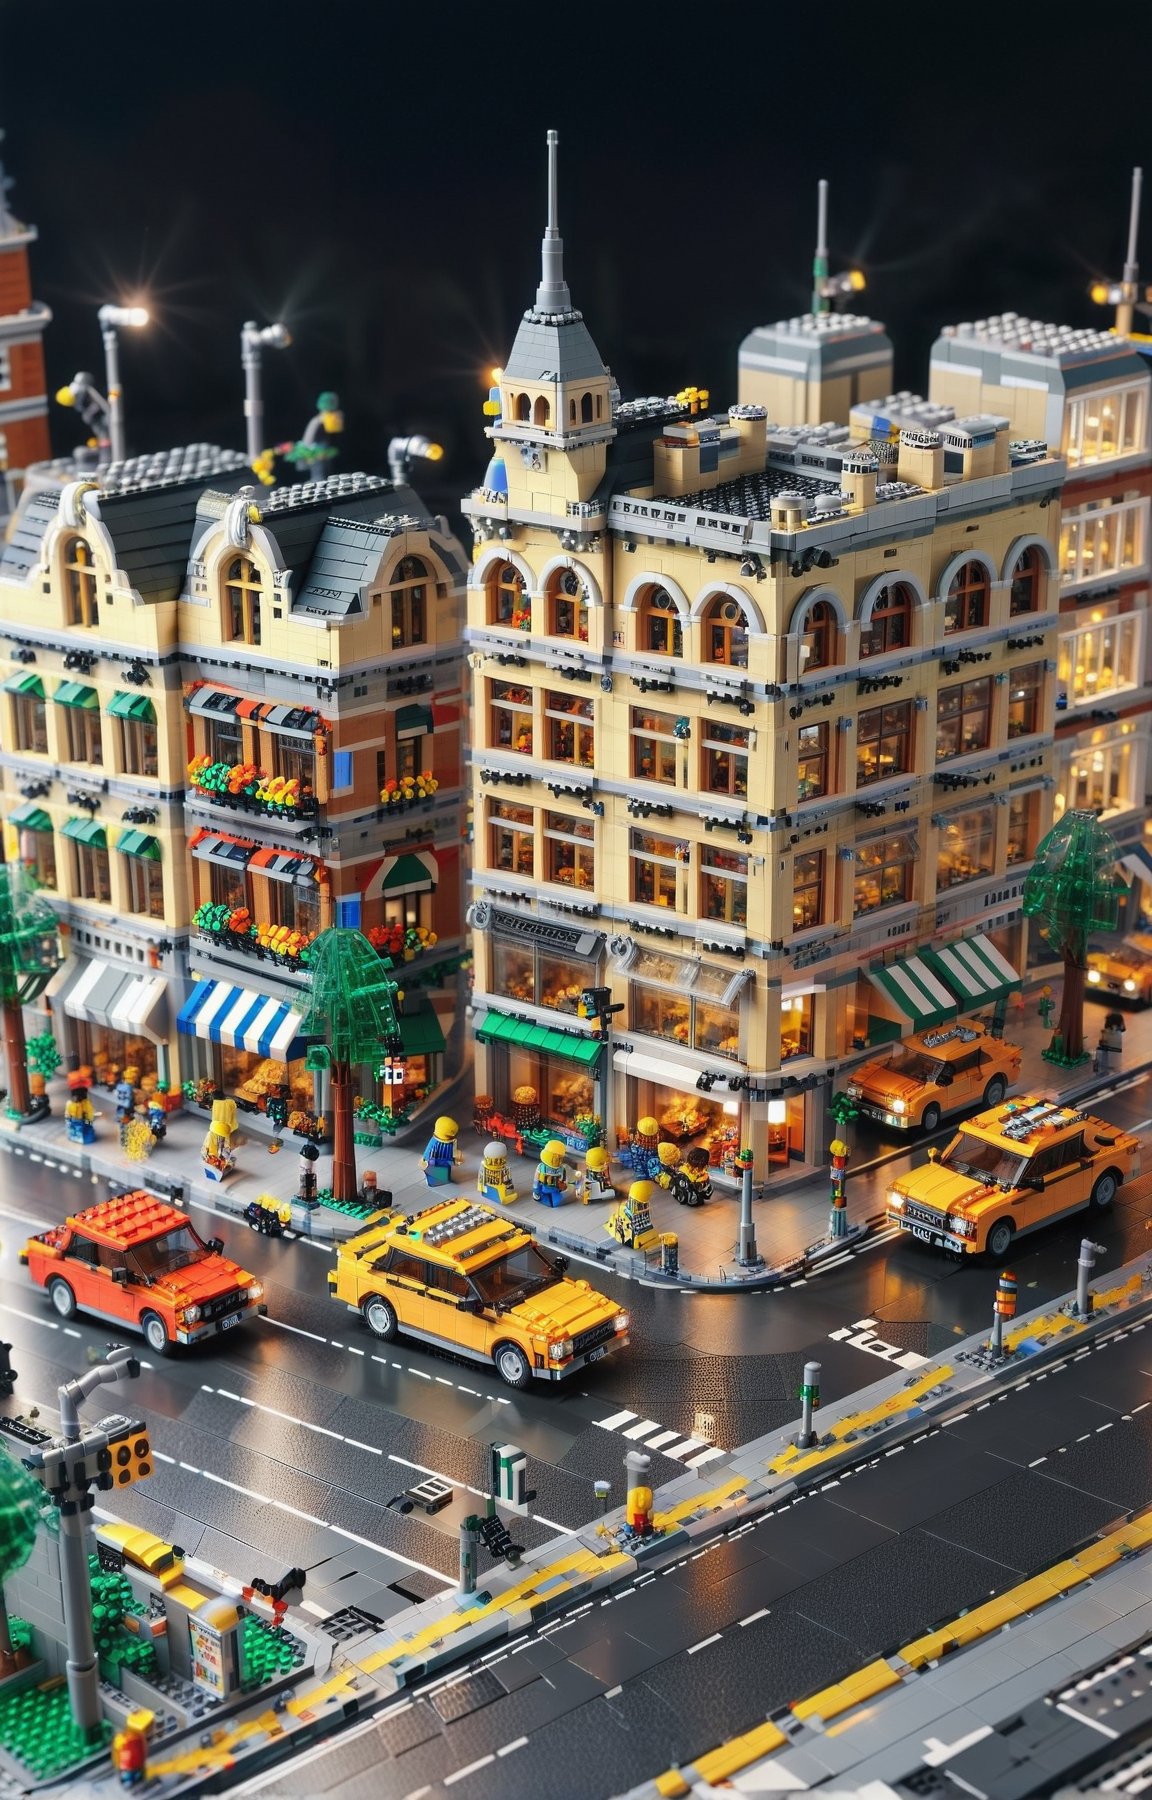 LEGO city street night scene, highly detailed, super high resolution, 8K UHD,lego